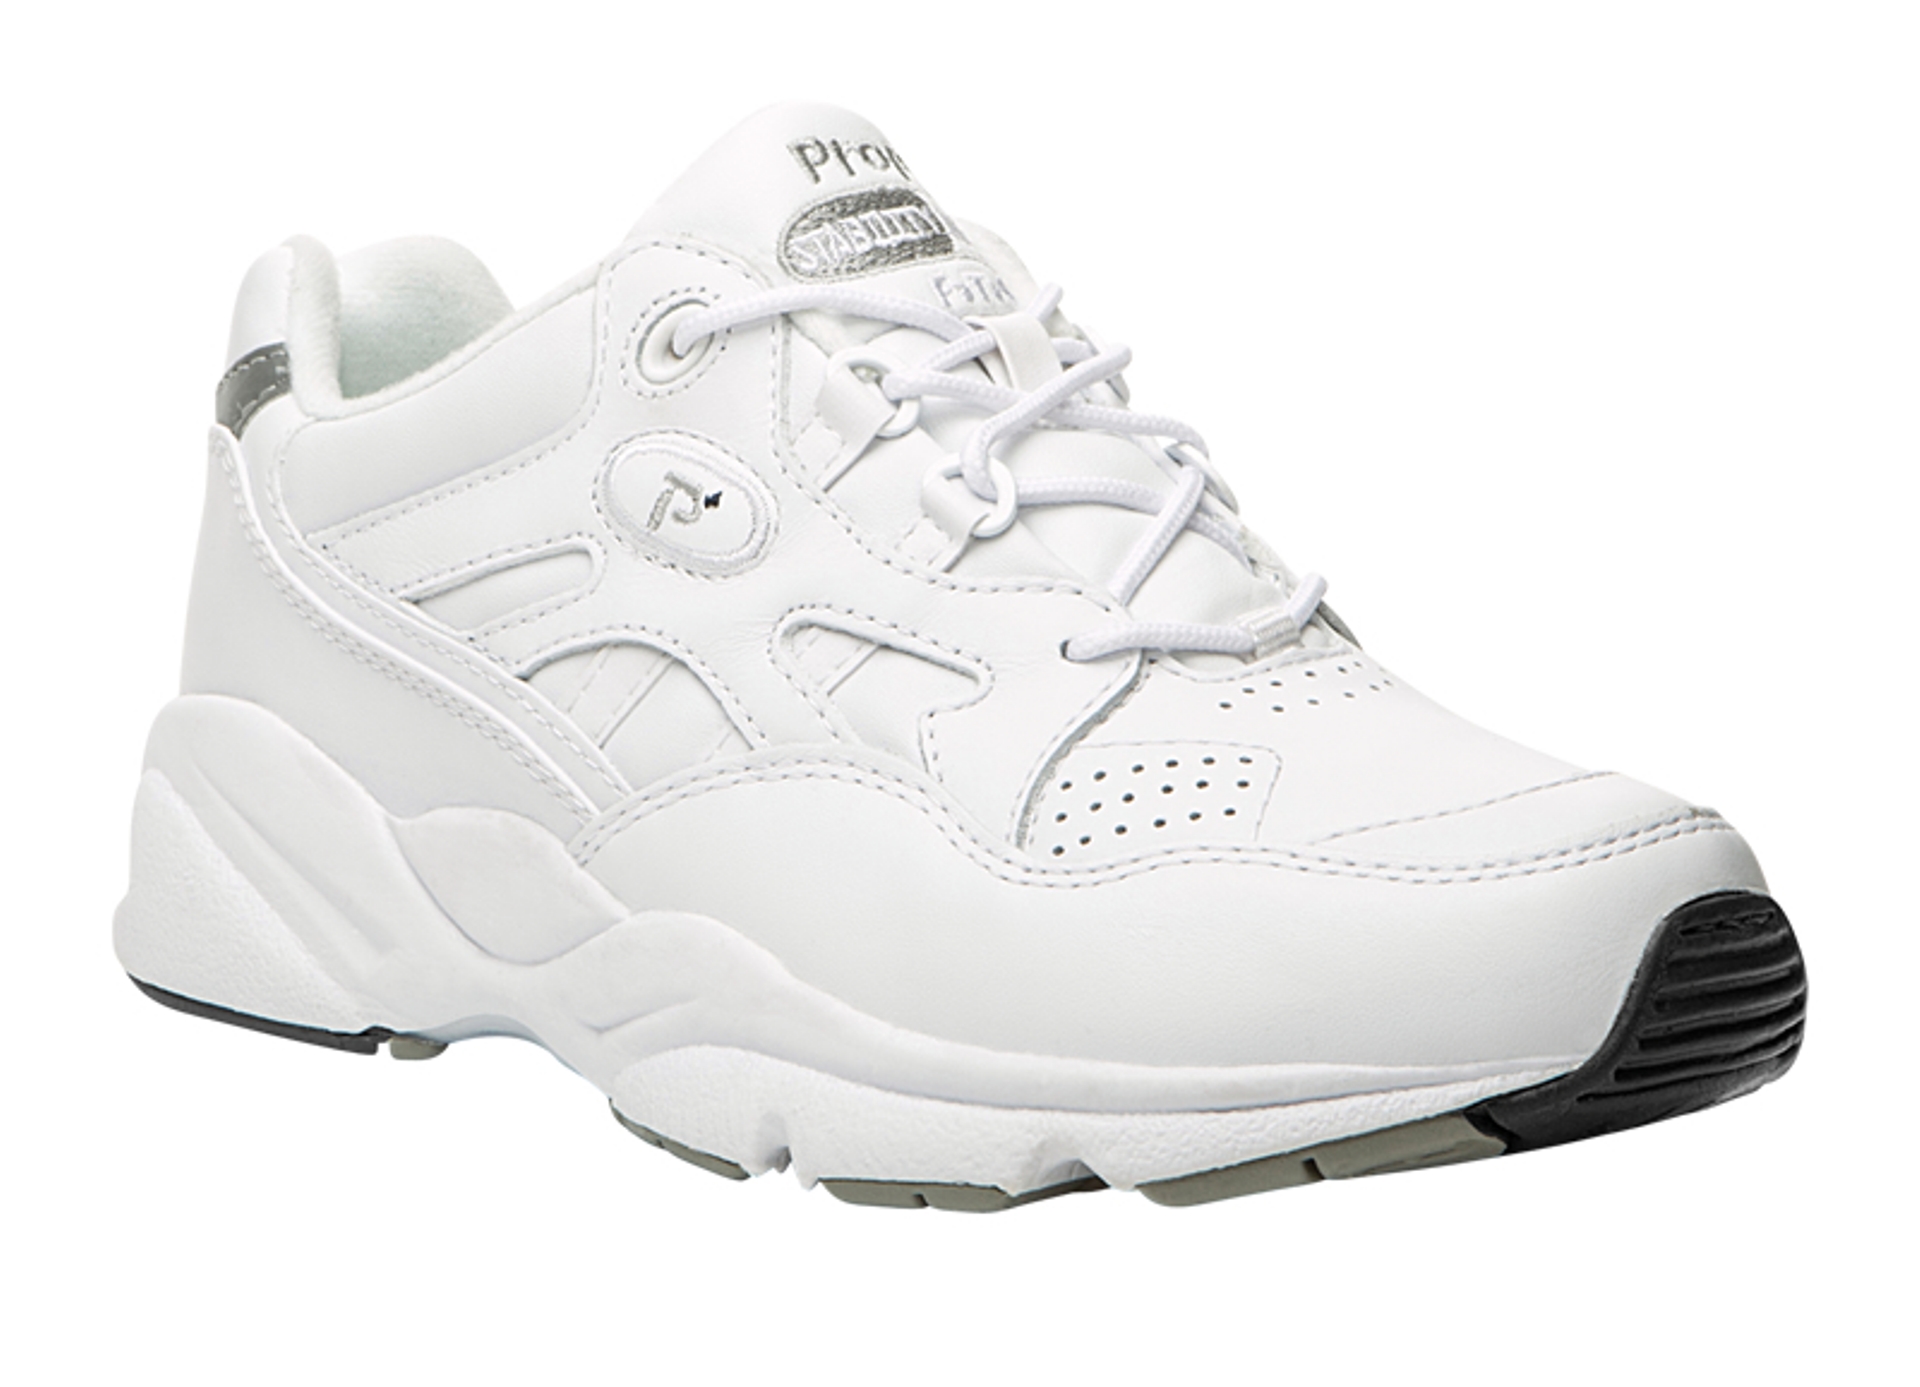 Propet Women's Stability Walker White Shoe - Wide Widths Available